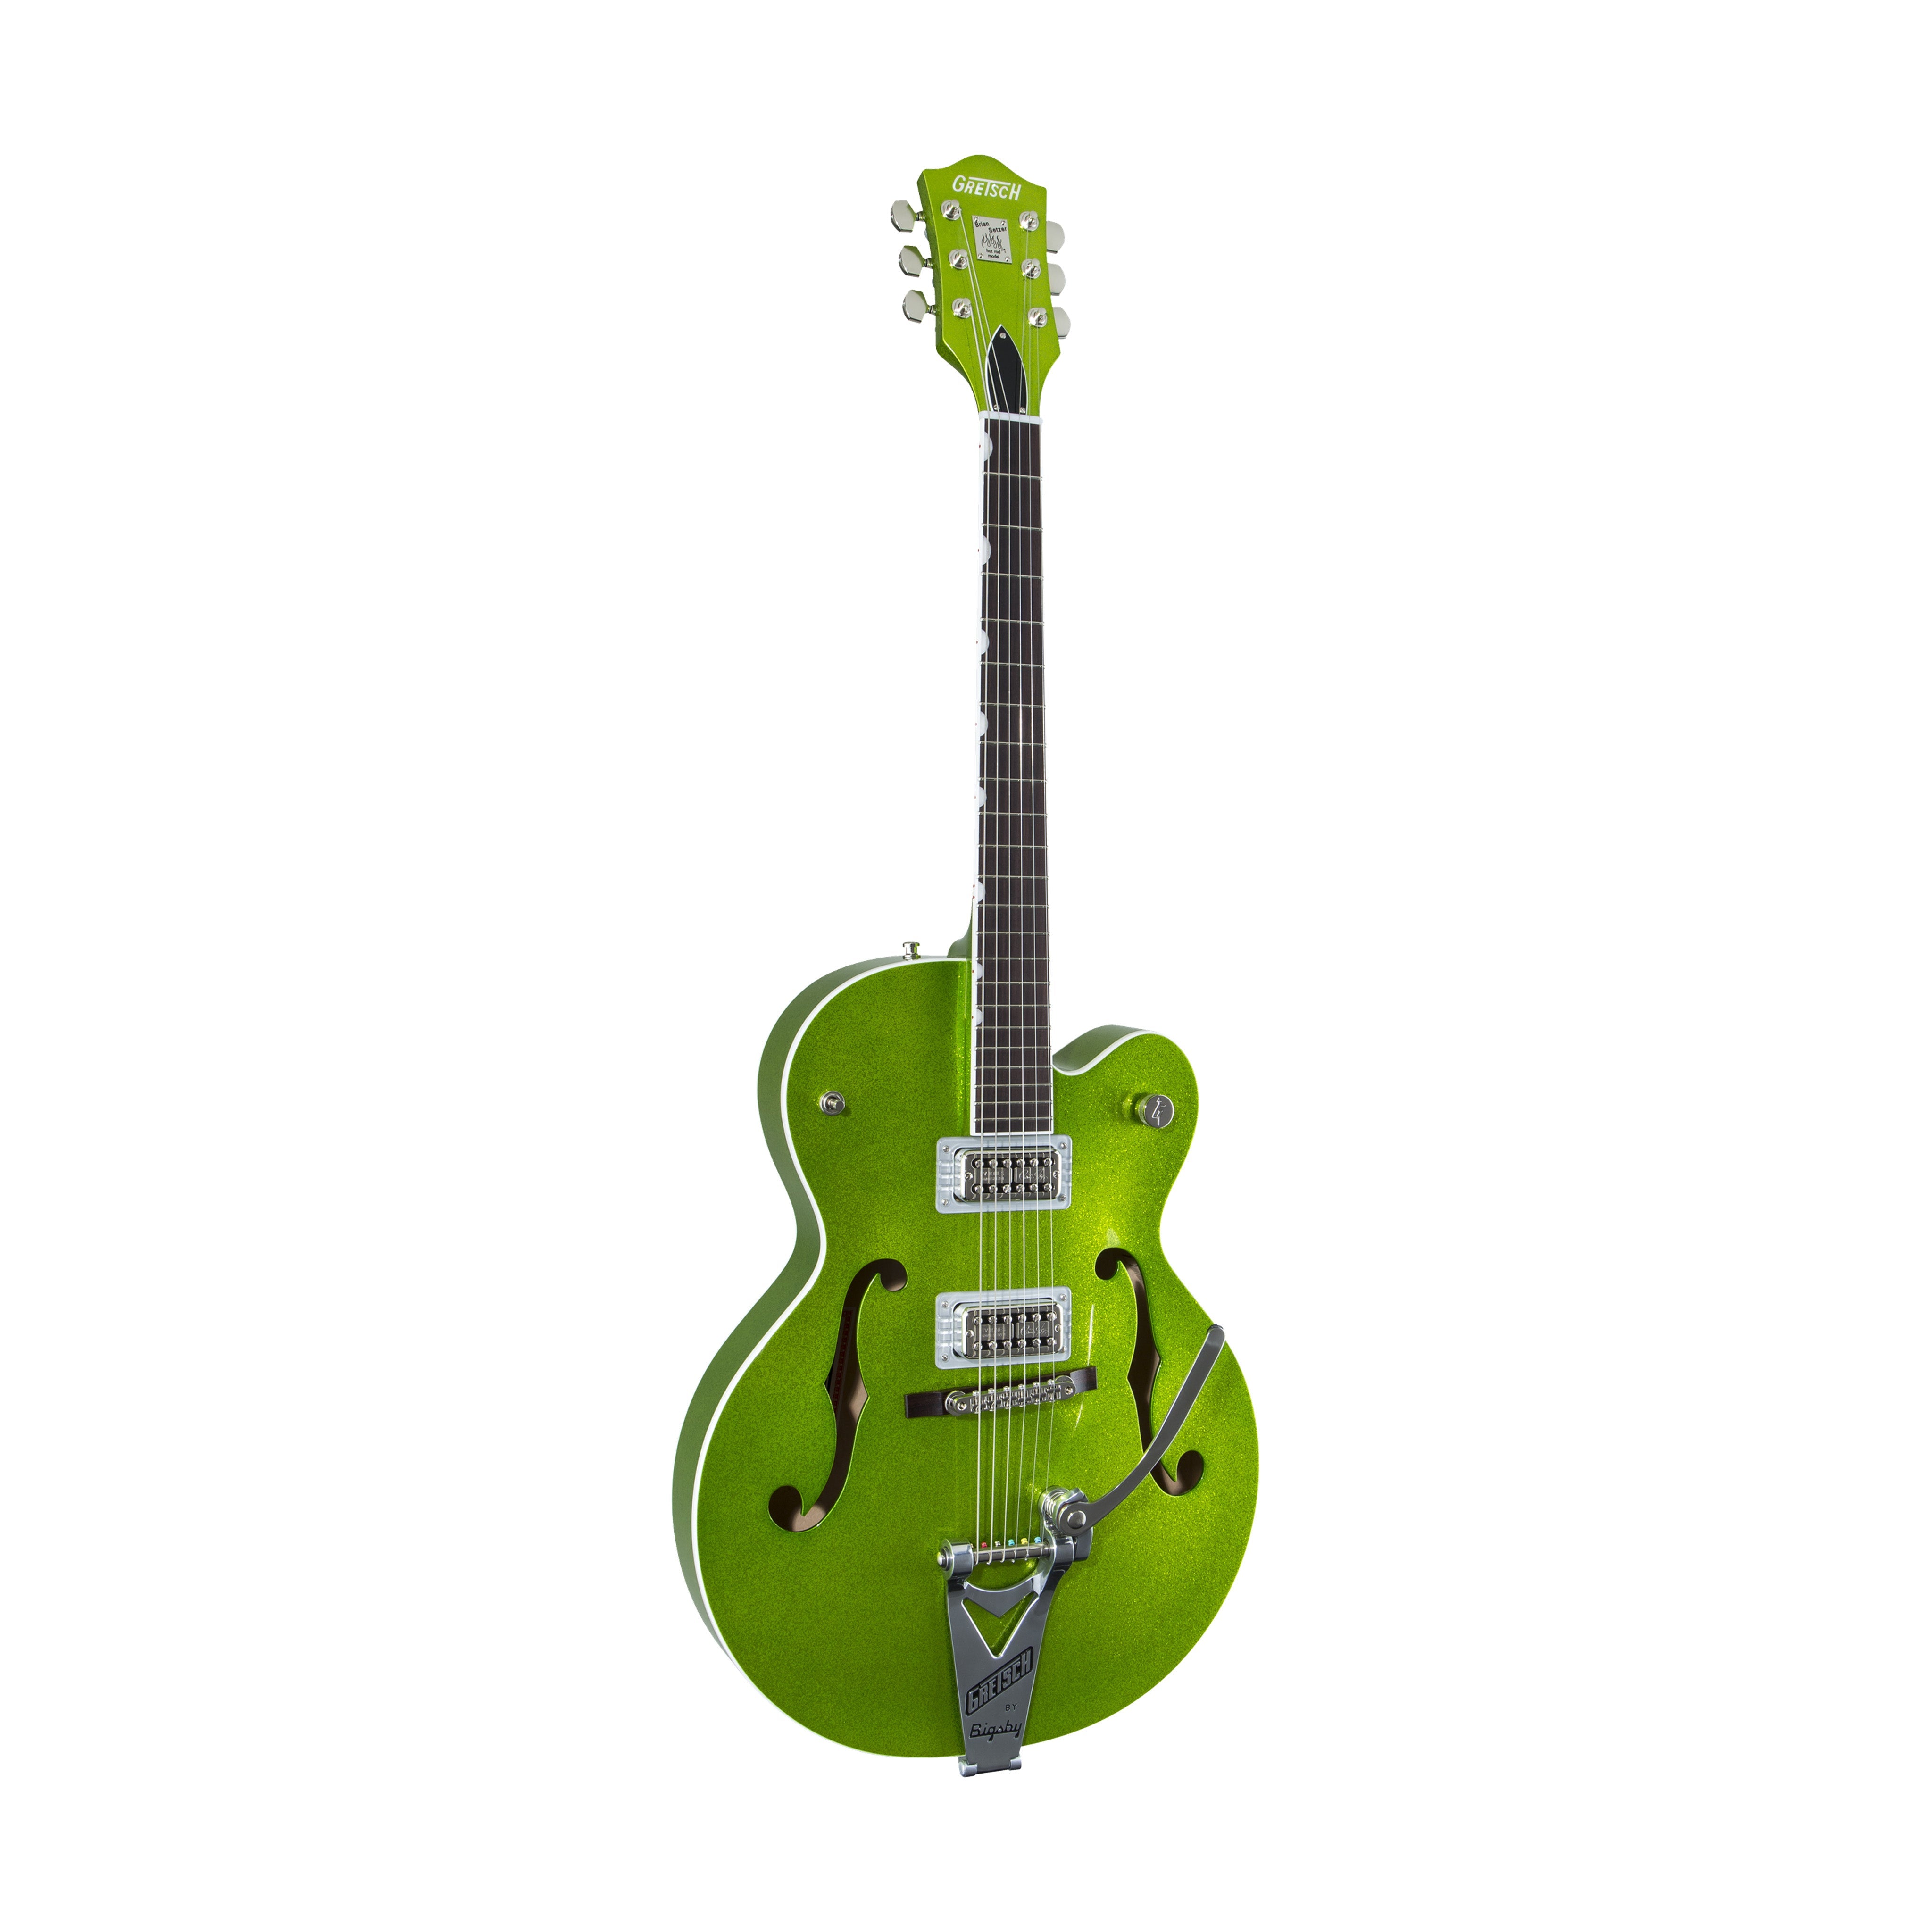 Gretsch G6120T Brian Setzer Signature Hot Rod Electric Guitar, Extreme Coolant Green Sparkle